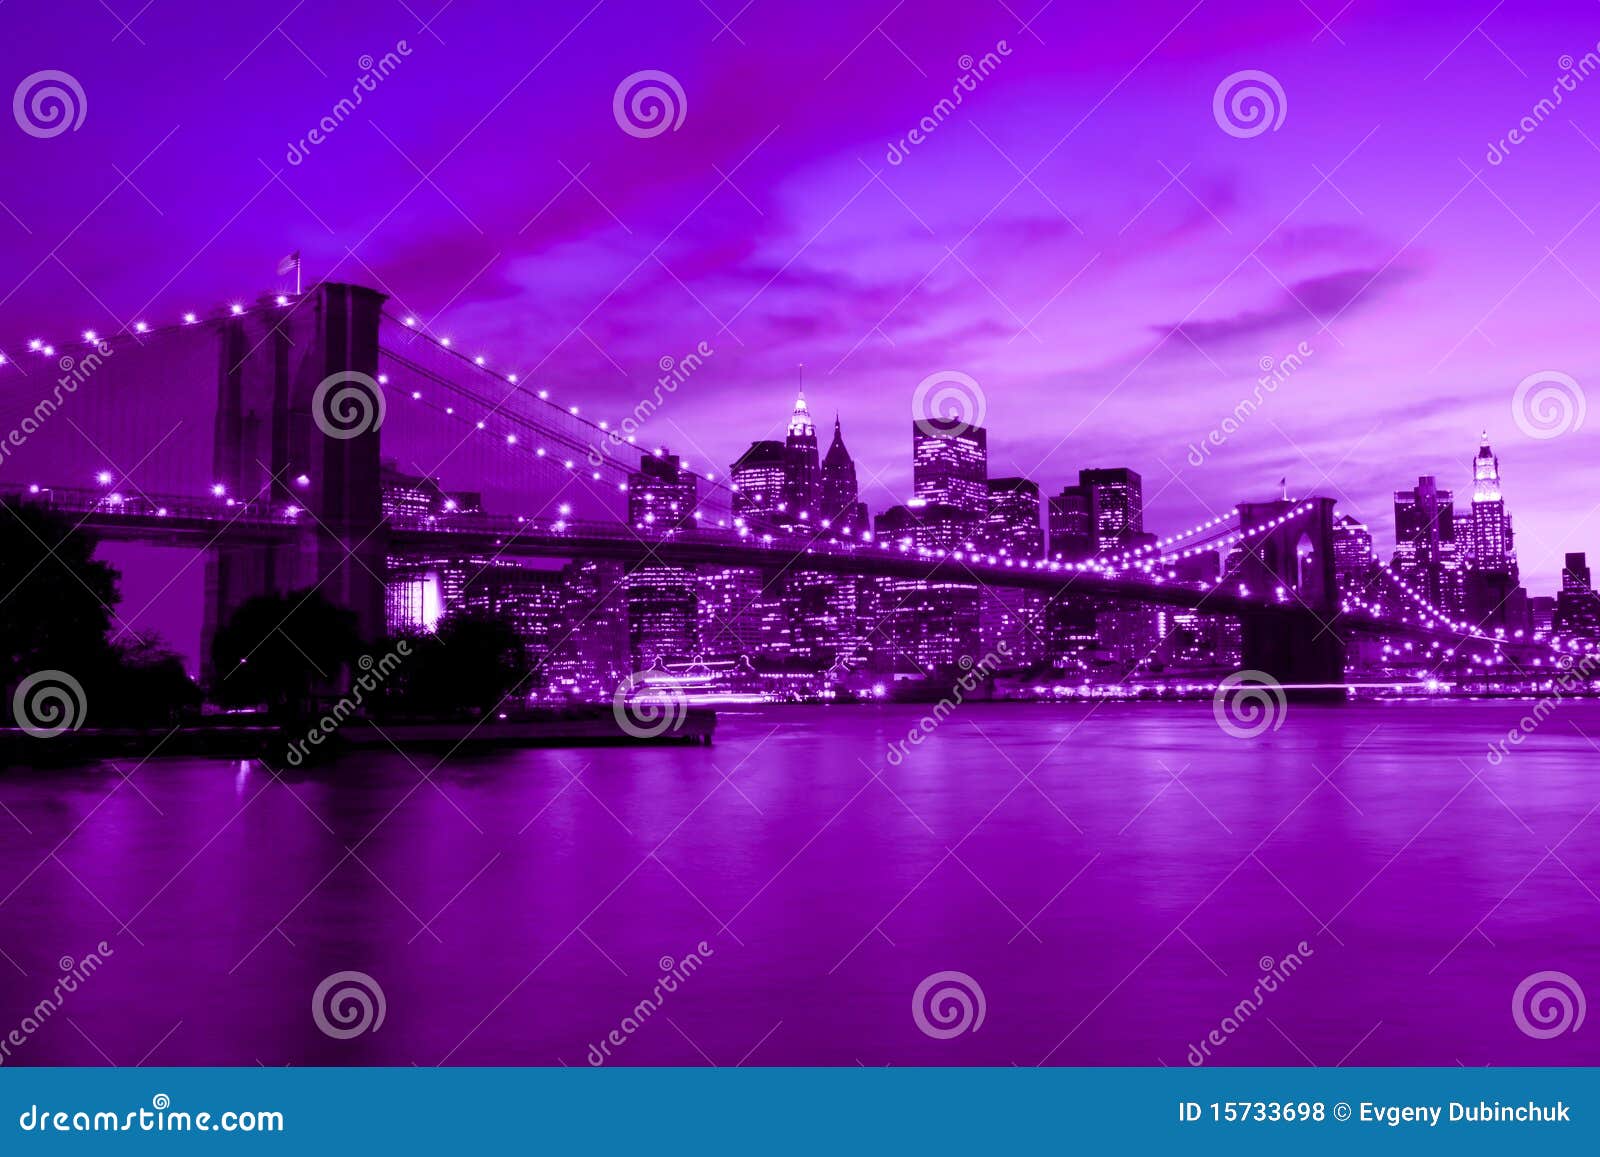 Brooklyn Bridge, York in Purple and Blue Tone Photo - Image of building, metropolis: 15733698